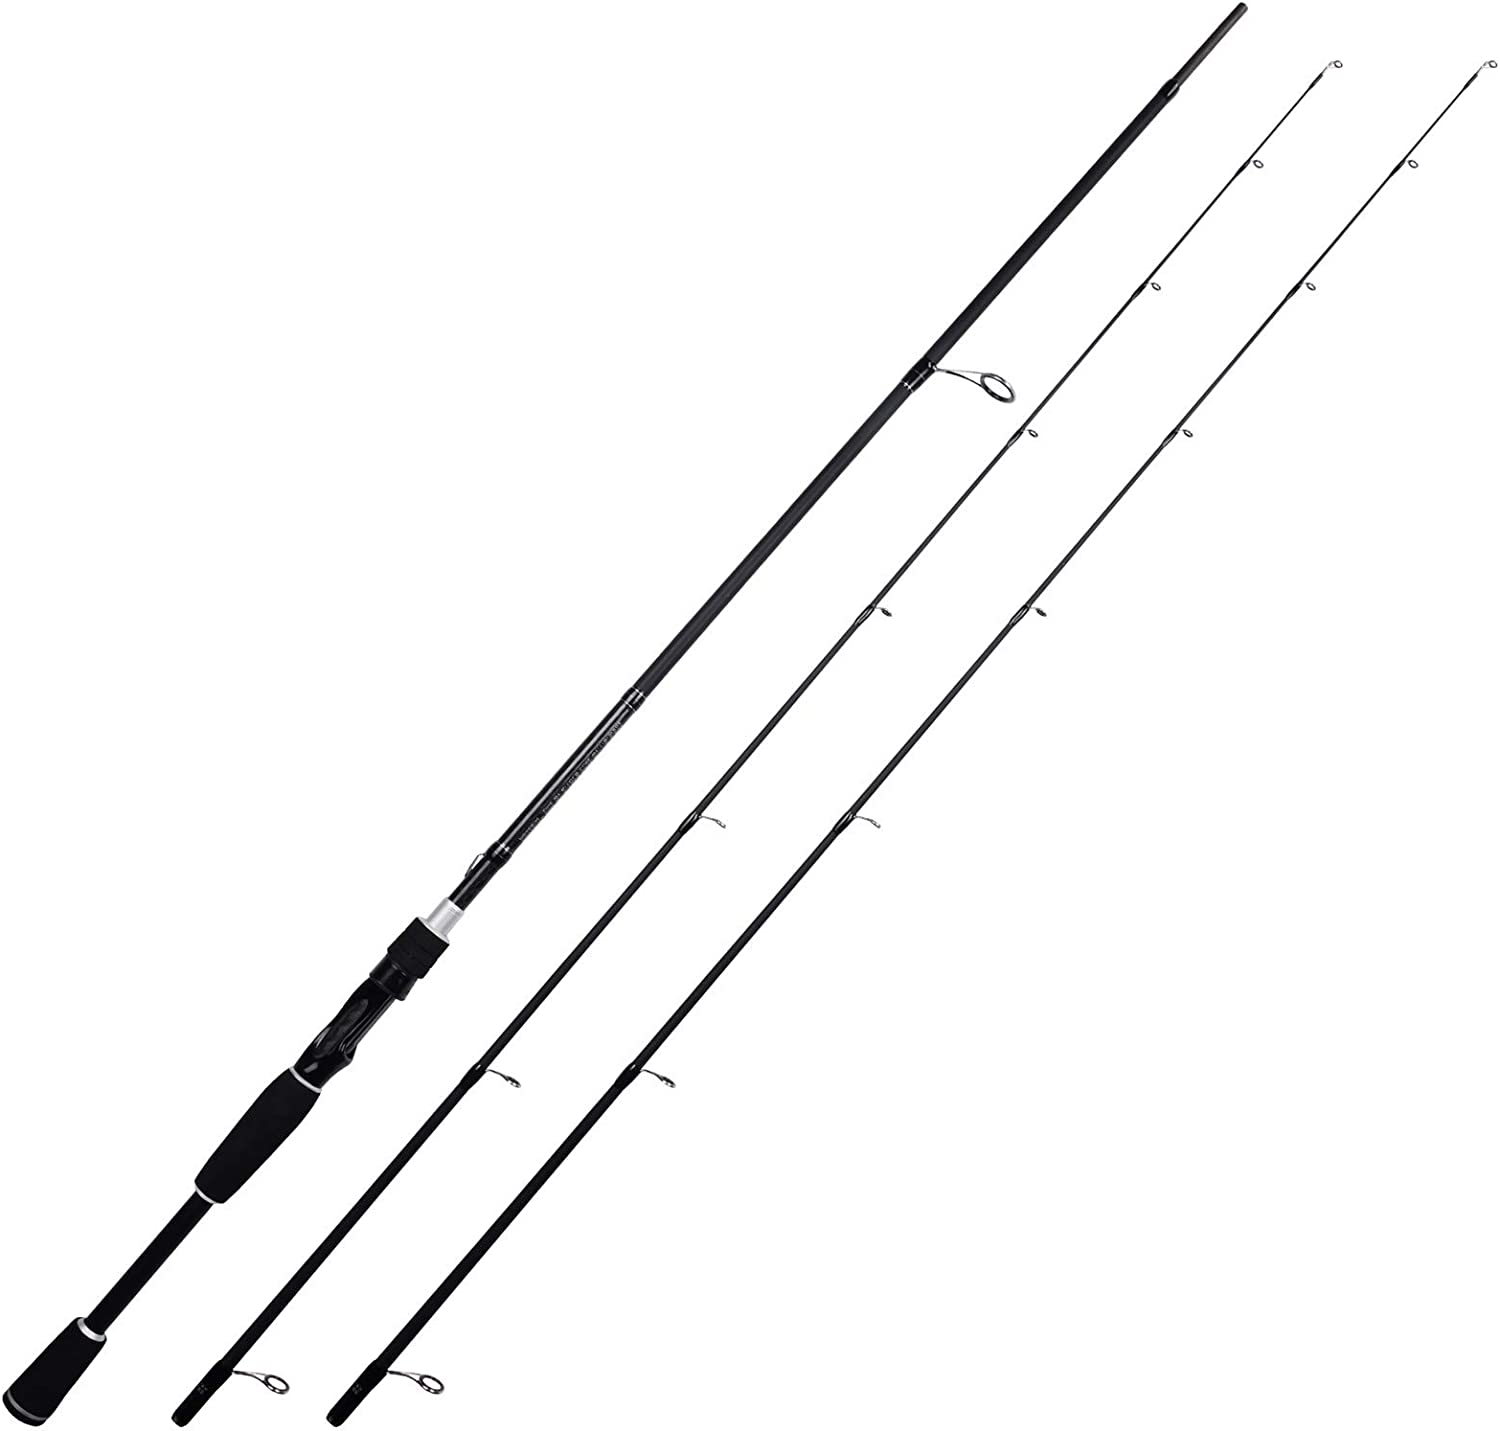 KastKing Perigee II Fishing Rods - Best Spincast Rod Under $100